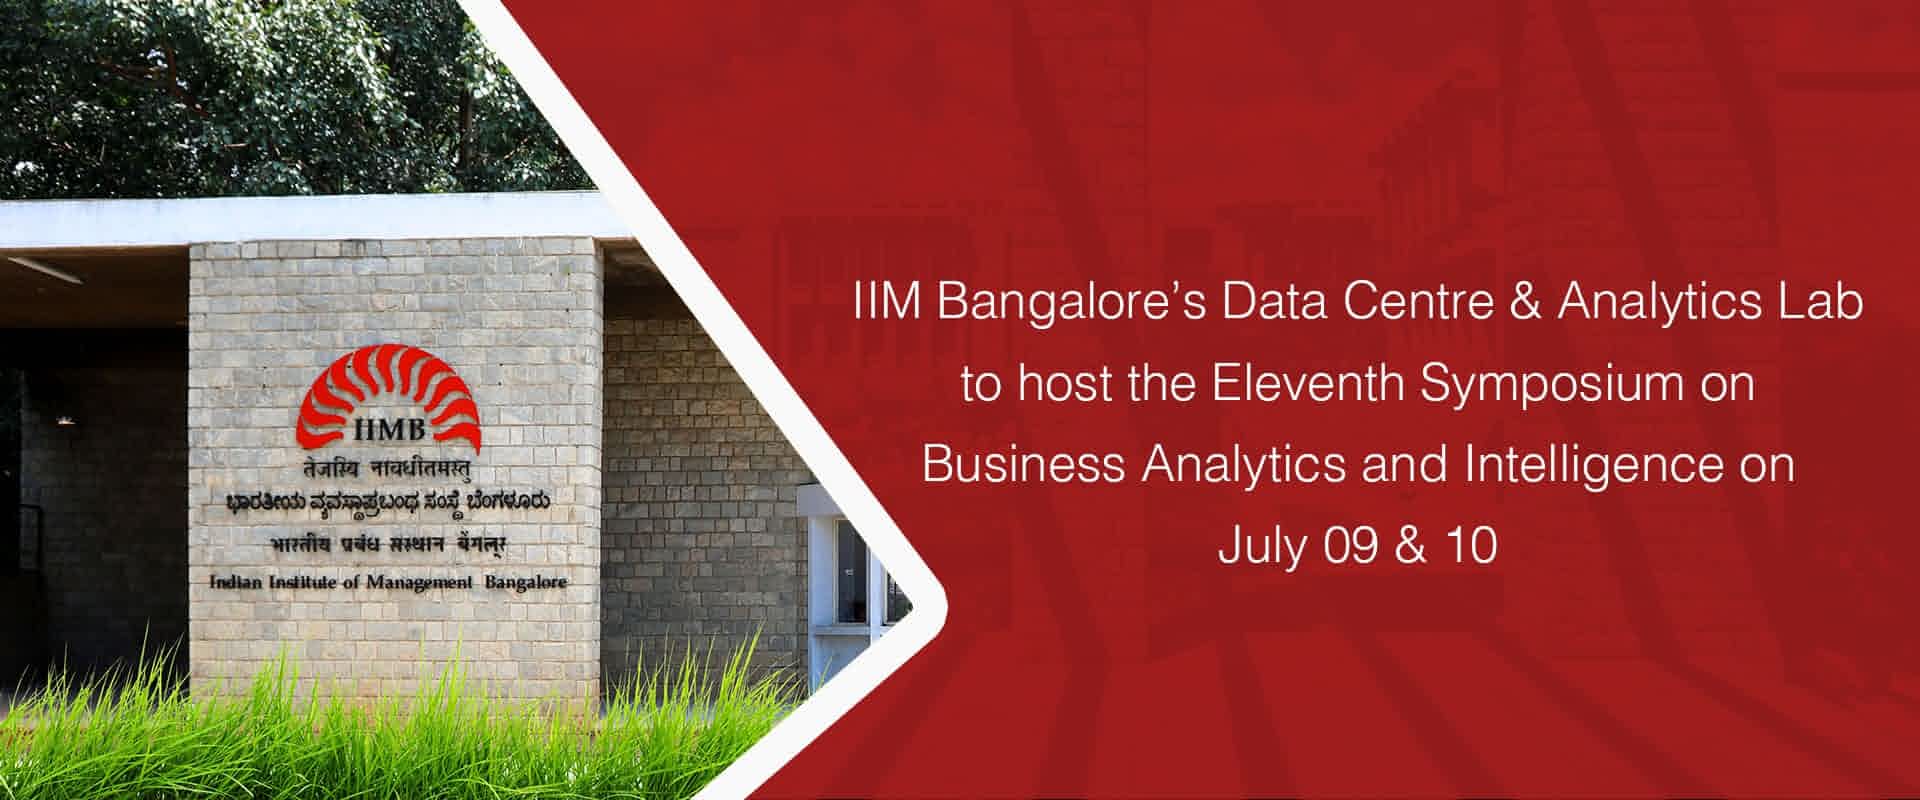 IIM Bangalore’s Data Centre & Analytics Lab to host the Eleventh Symposium on Business Analytics and Intelligence on July 09 & 10